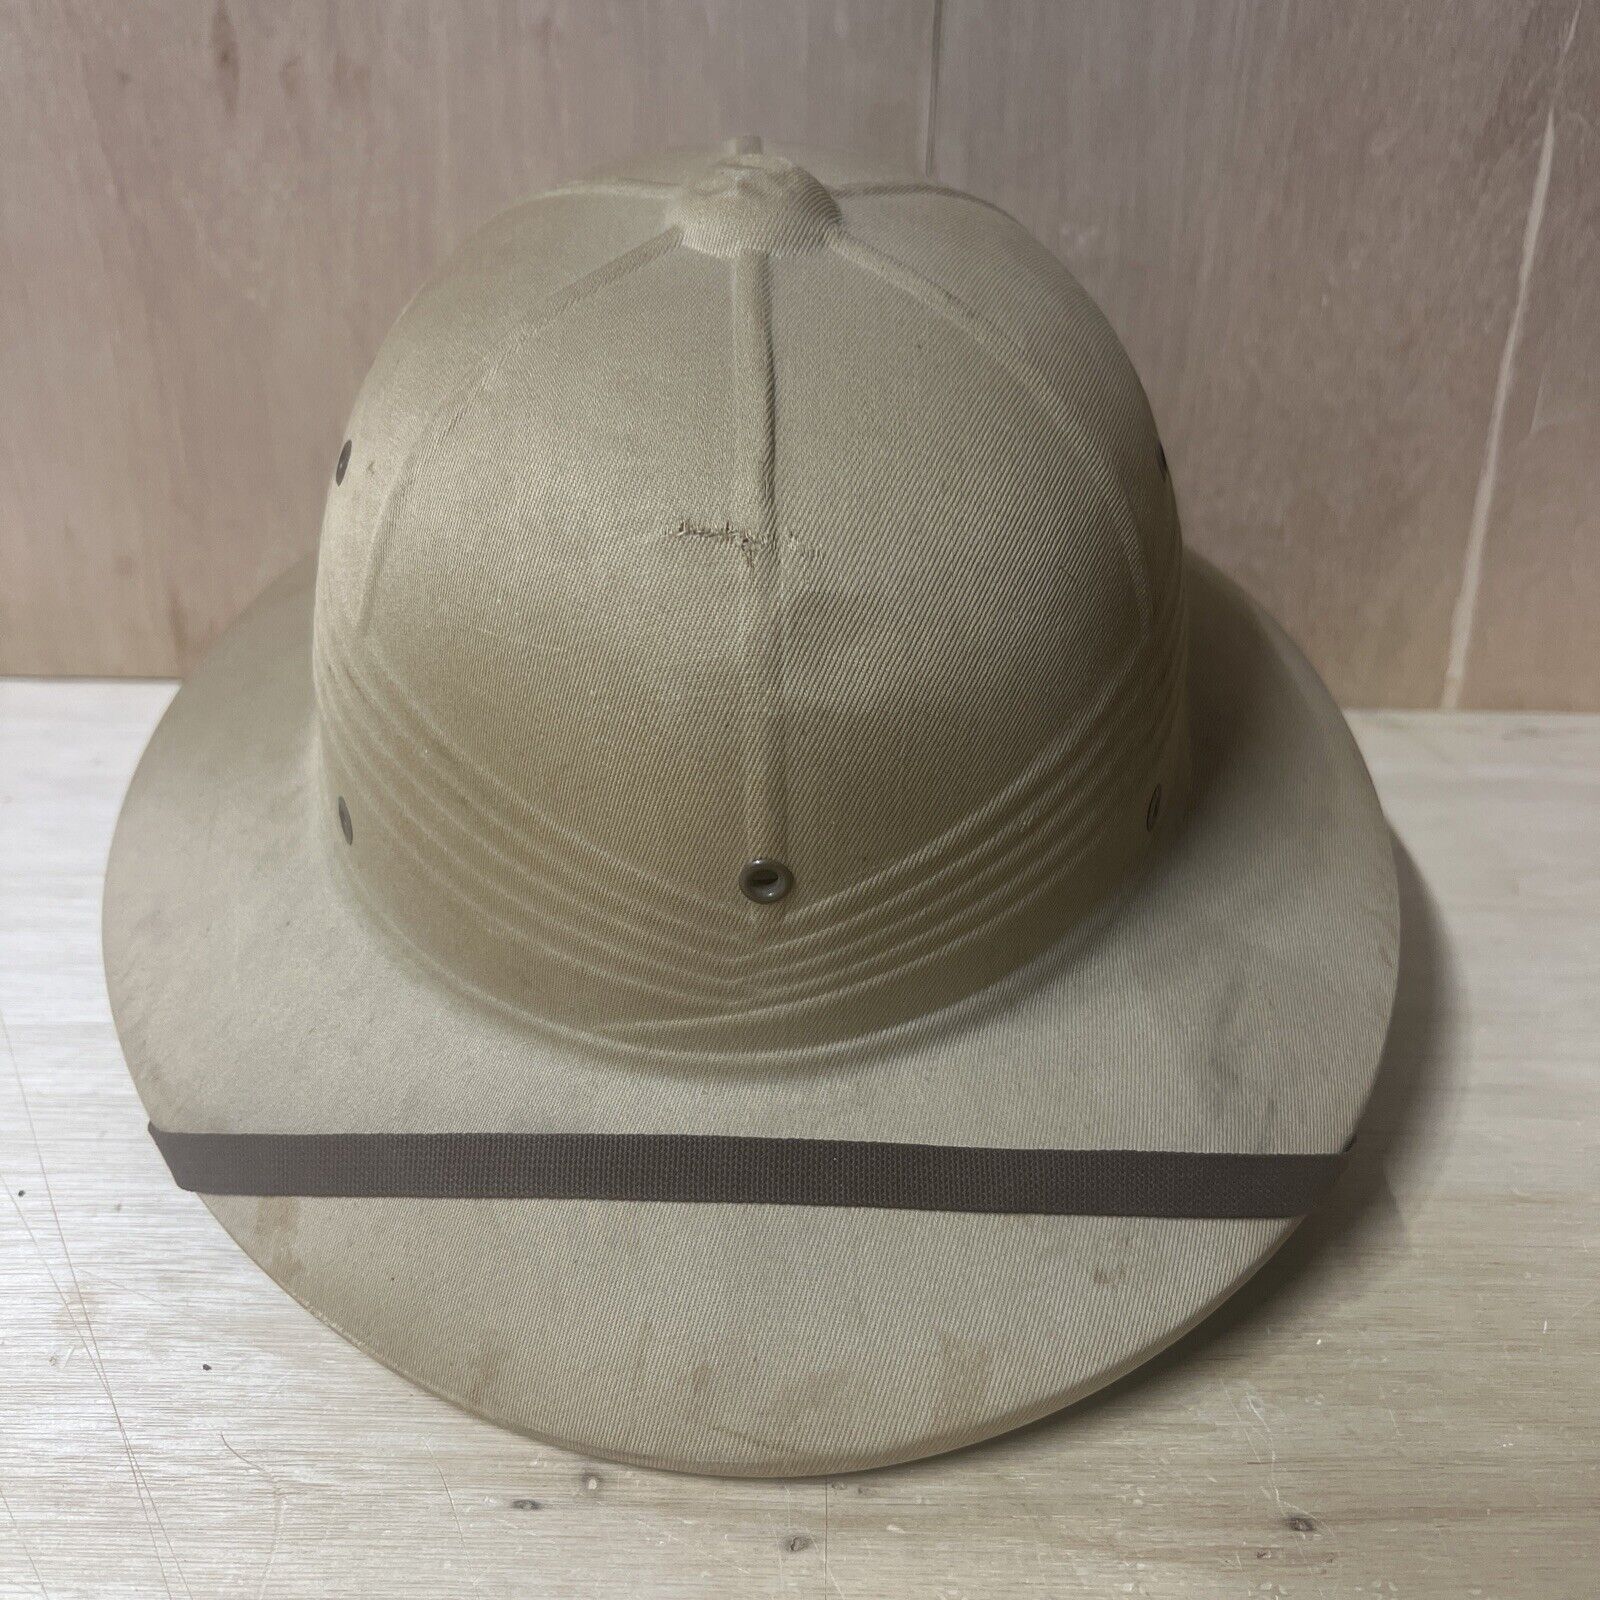 Antique Rare International Hat Co. Military Safari Helmet Date 31 December 1948